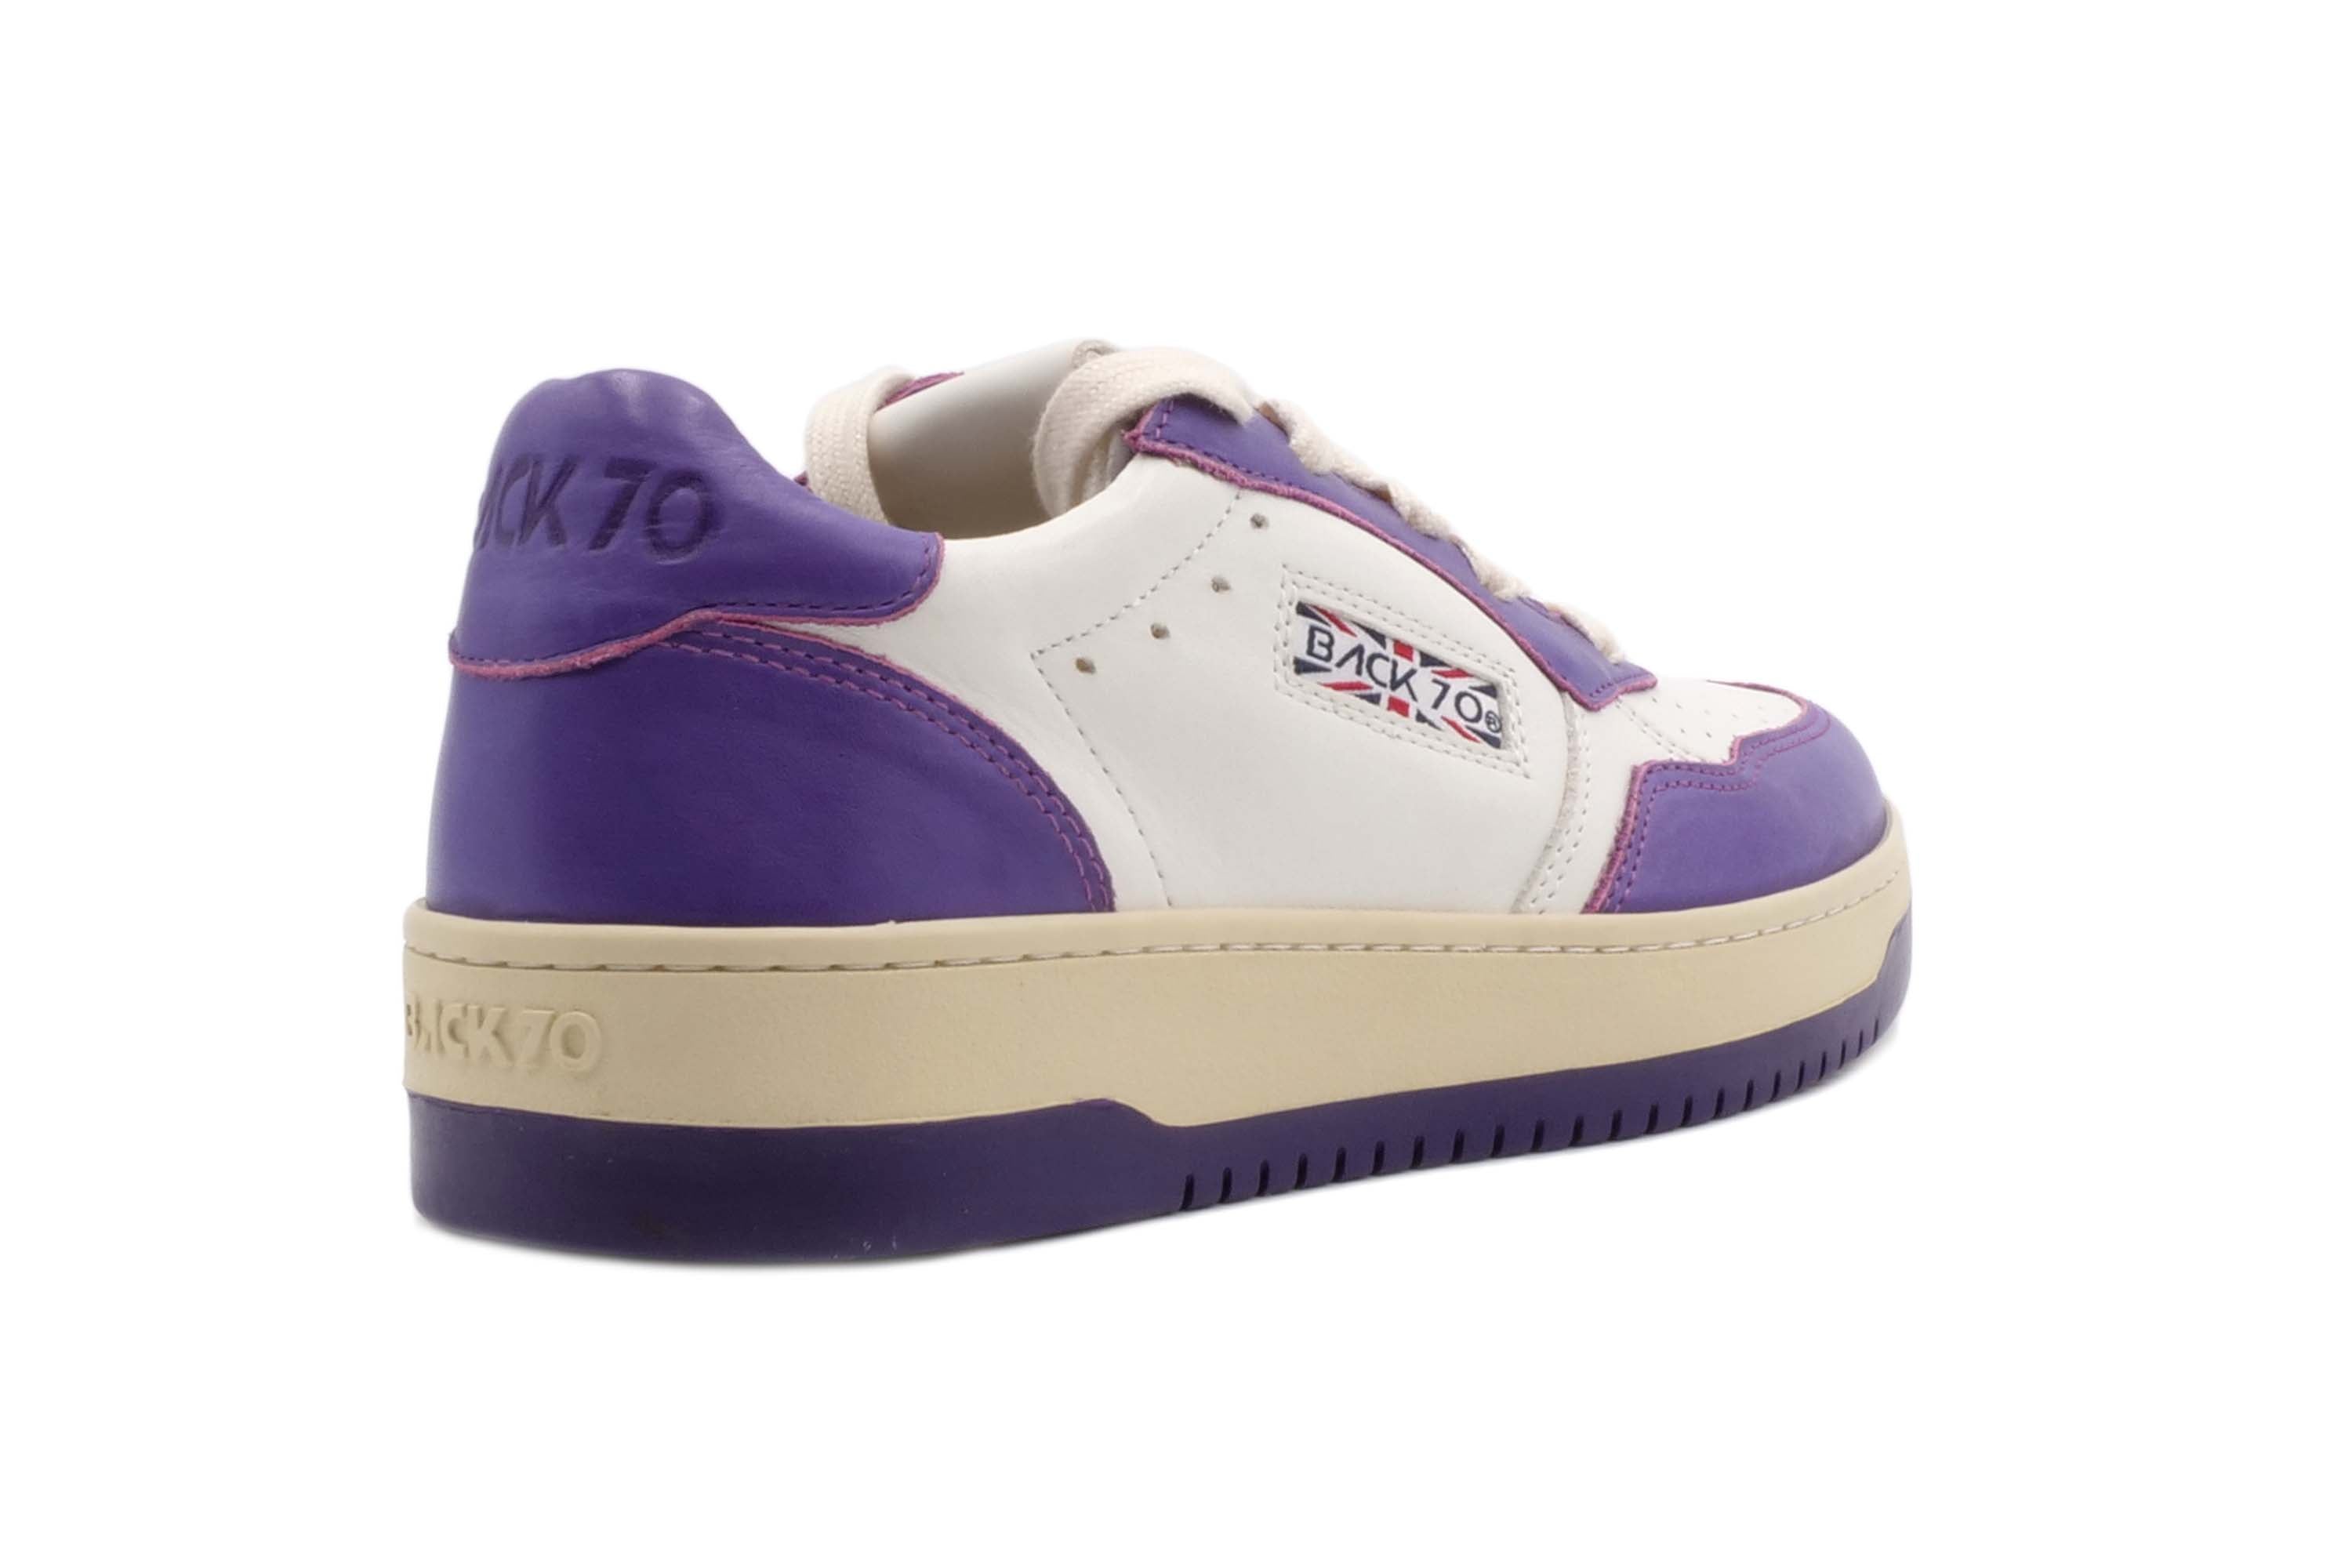 Sneaker BACK 70 SLAM White/Purple - W - Sergio Fabbri